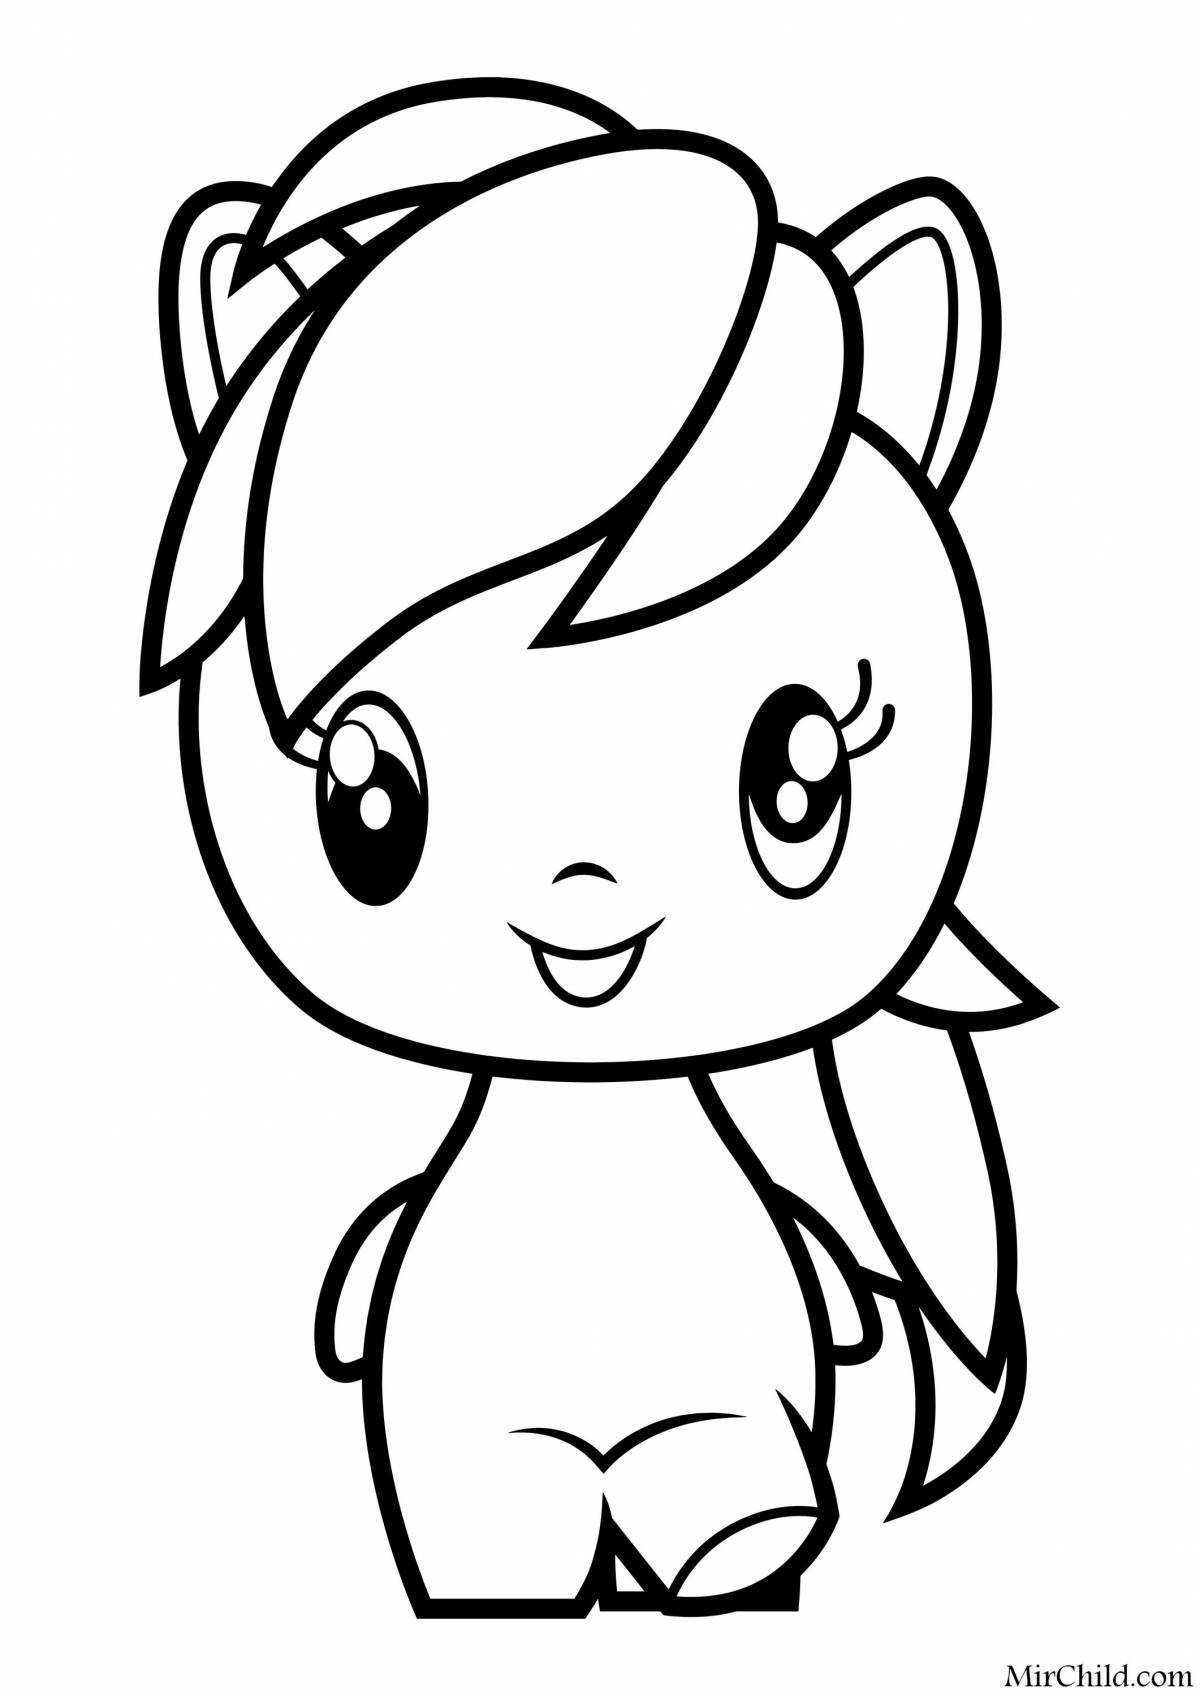 Coloring page happy cute pony